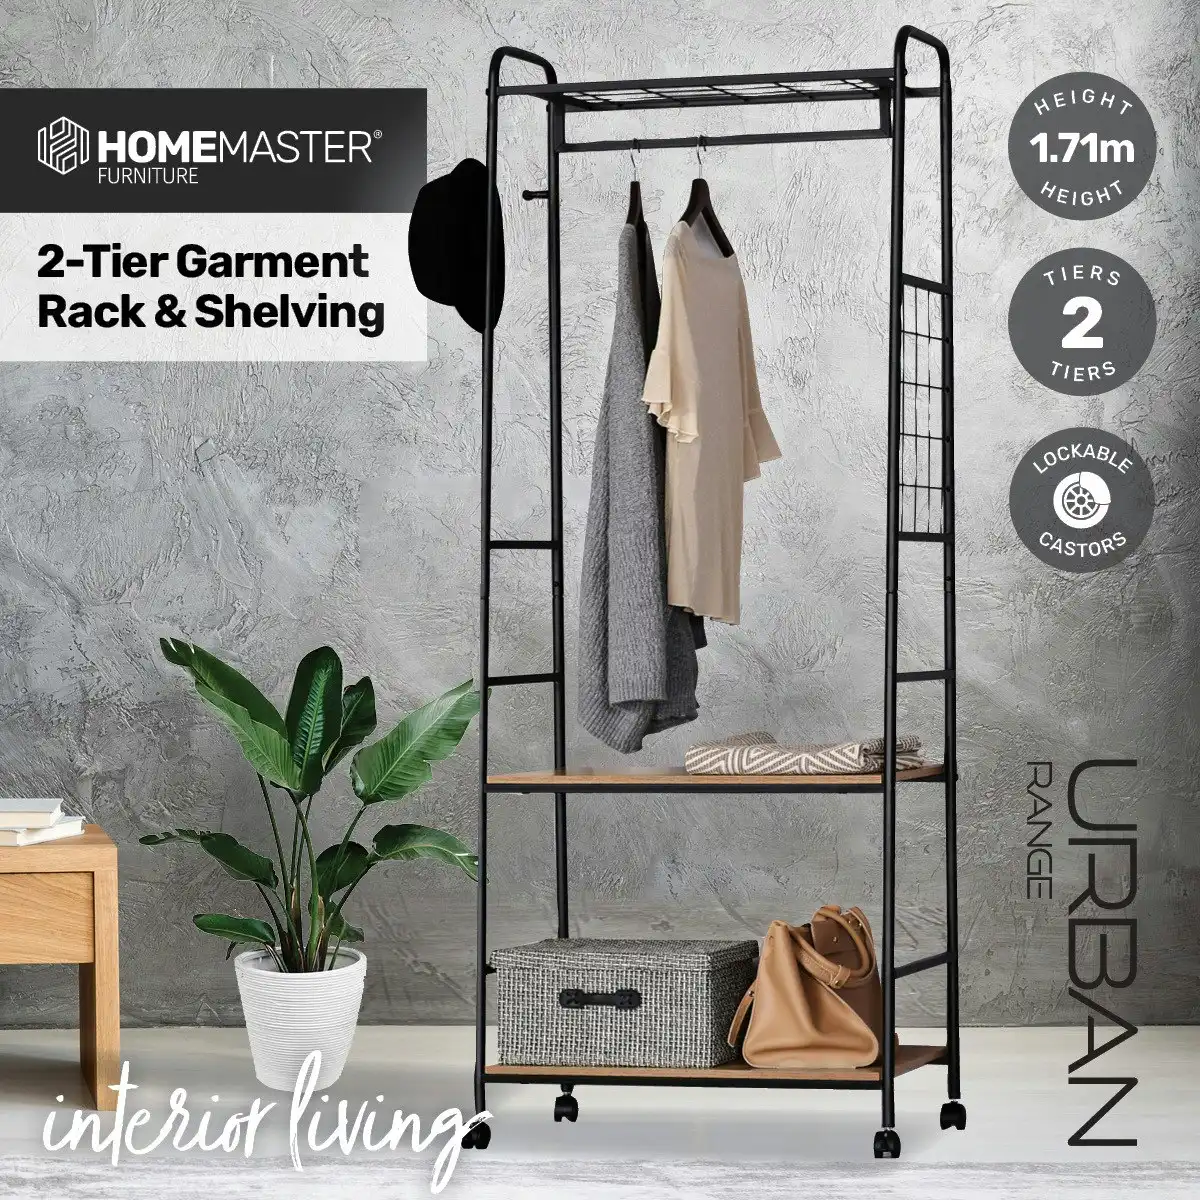 Home Master Garment Rack & Shelving 2 Tier Sleek Stylish Modern Design 1.71m